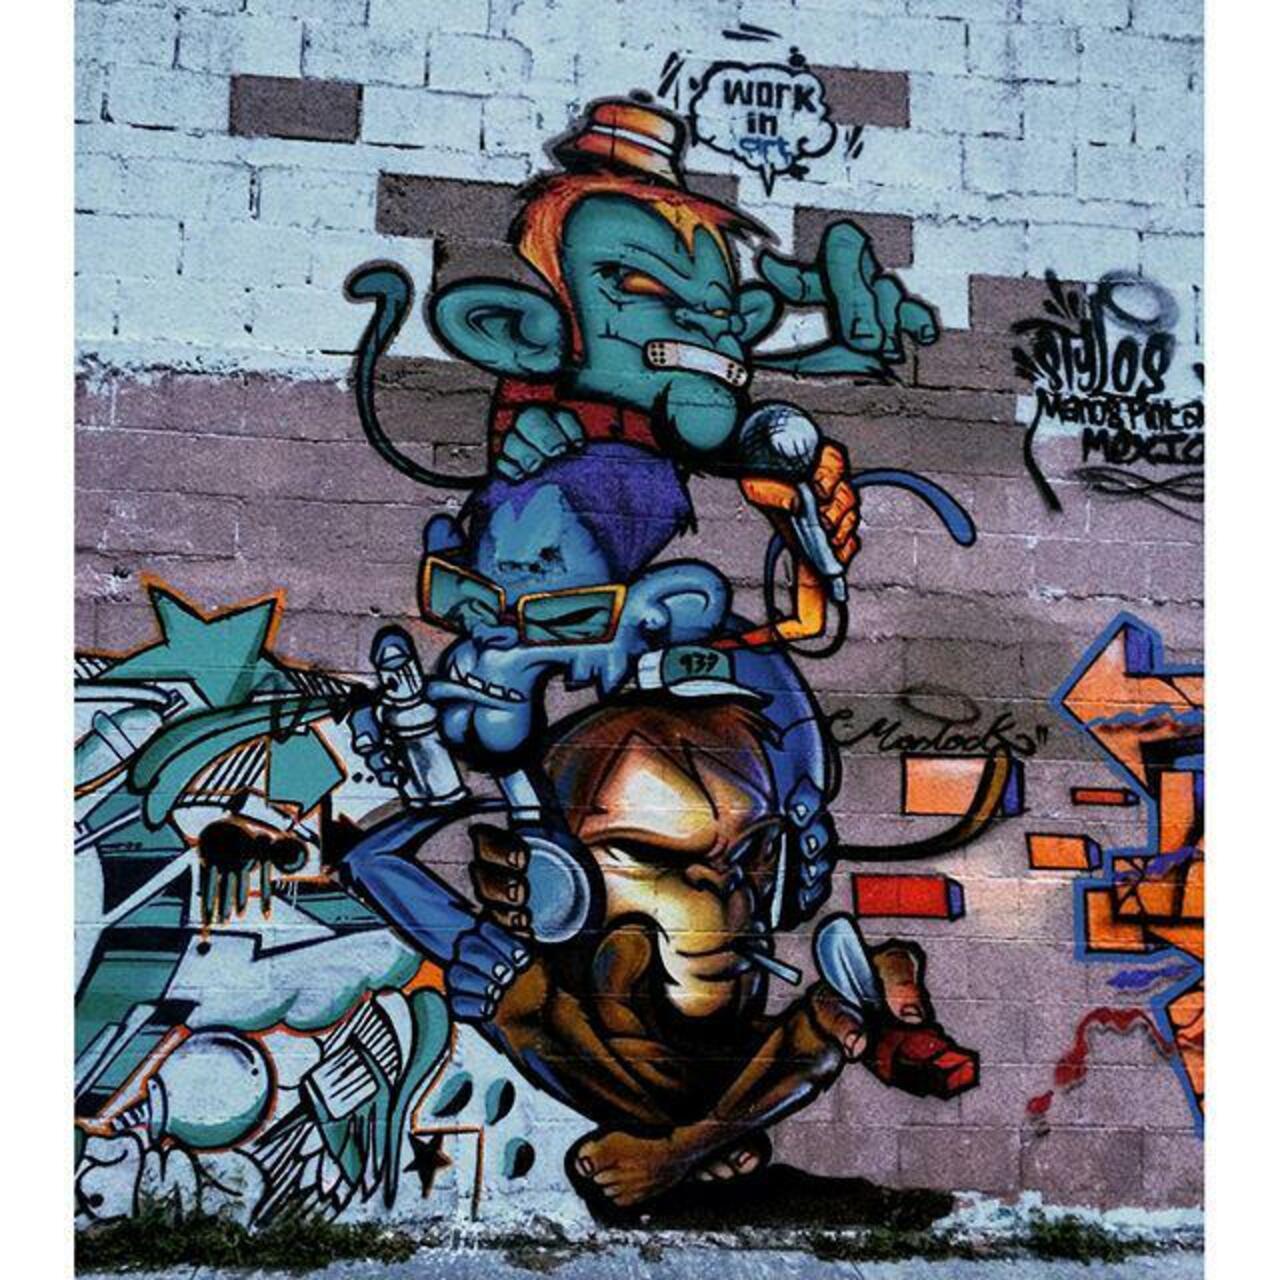 RT @StArtEverywhere: #streetart #arteurbano #urbanart #urban #art #mexico #mural #graffiti #streetartmexico #urbanwalls #wall #streetpho… http://t.co/DDsOKdoKaL